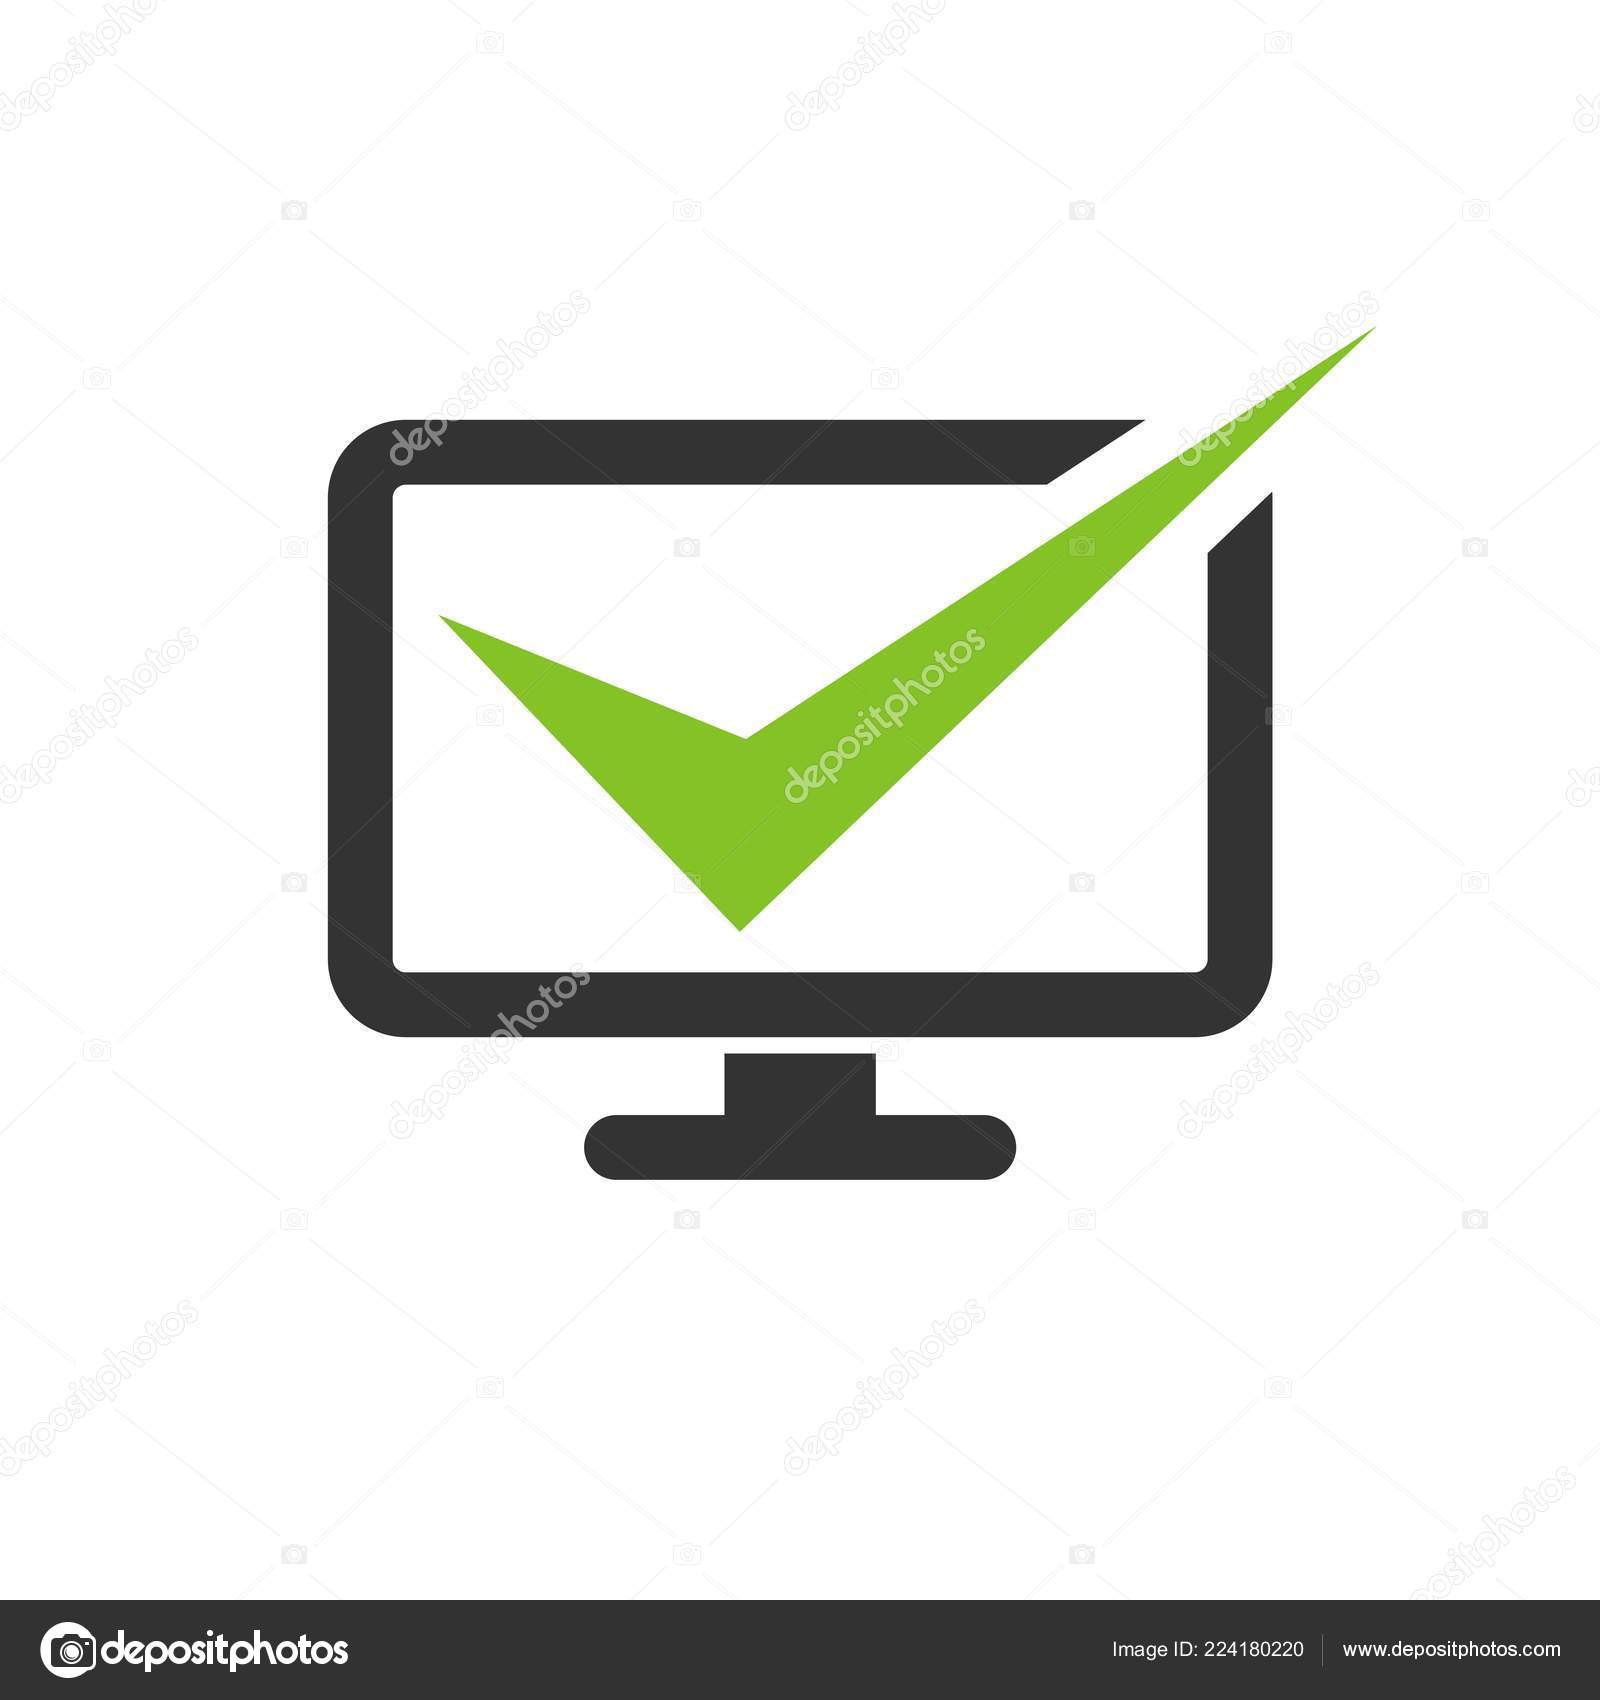 Green and white check logo, Check mark Computer Icons, Check Mark